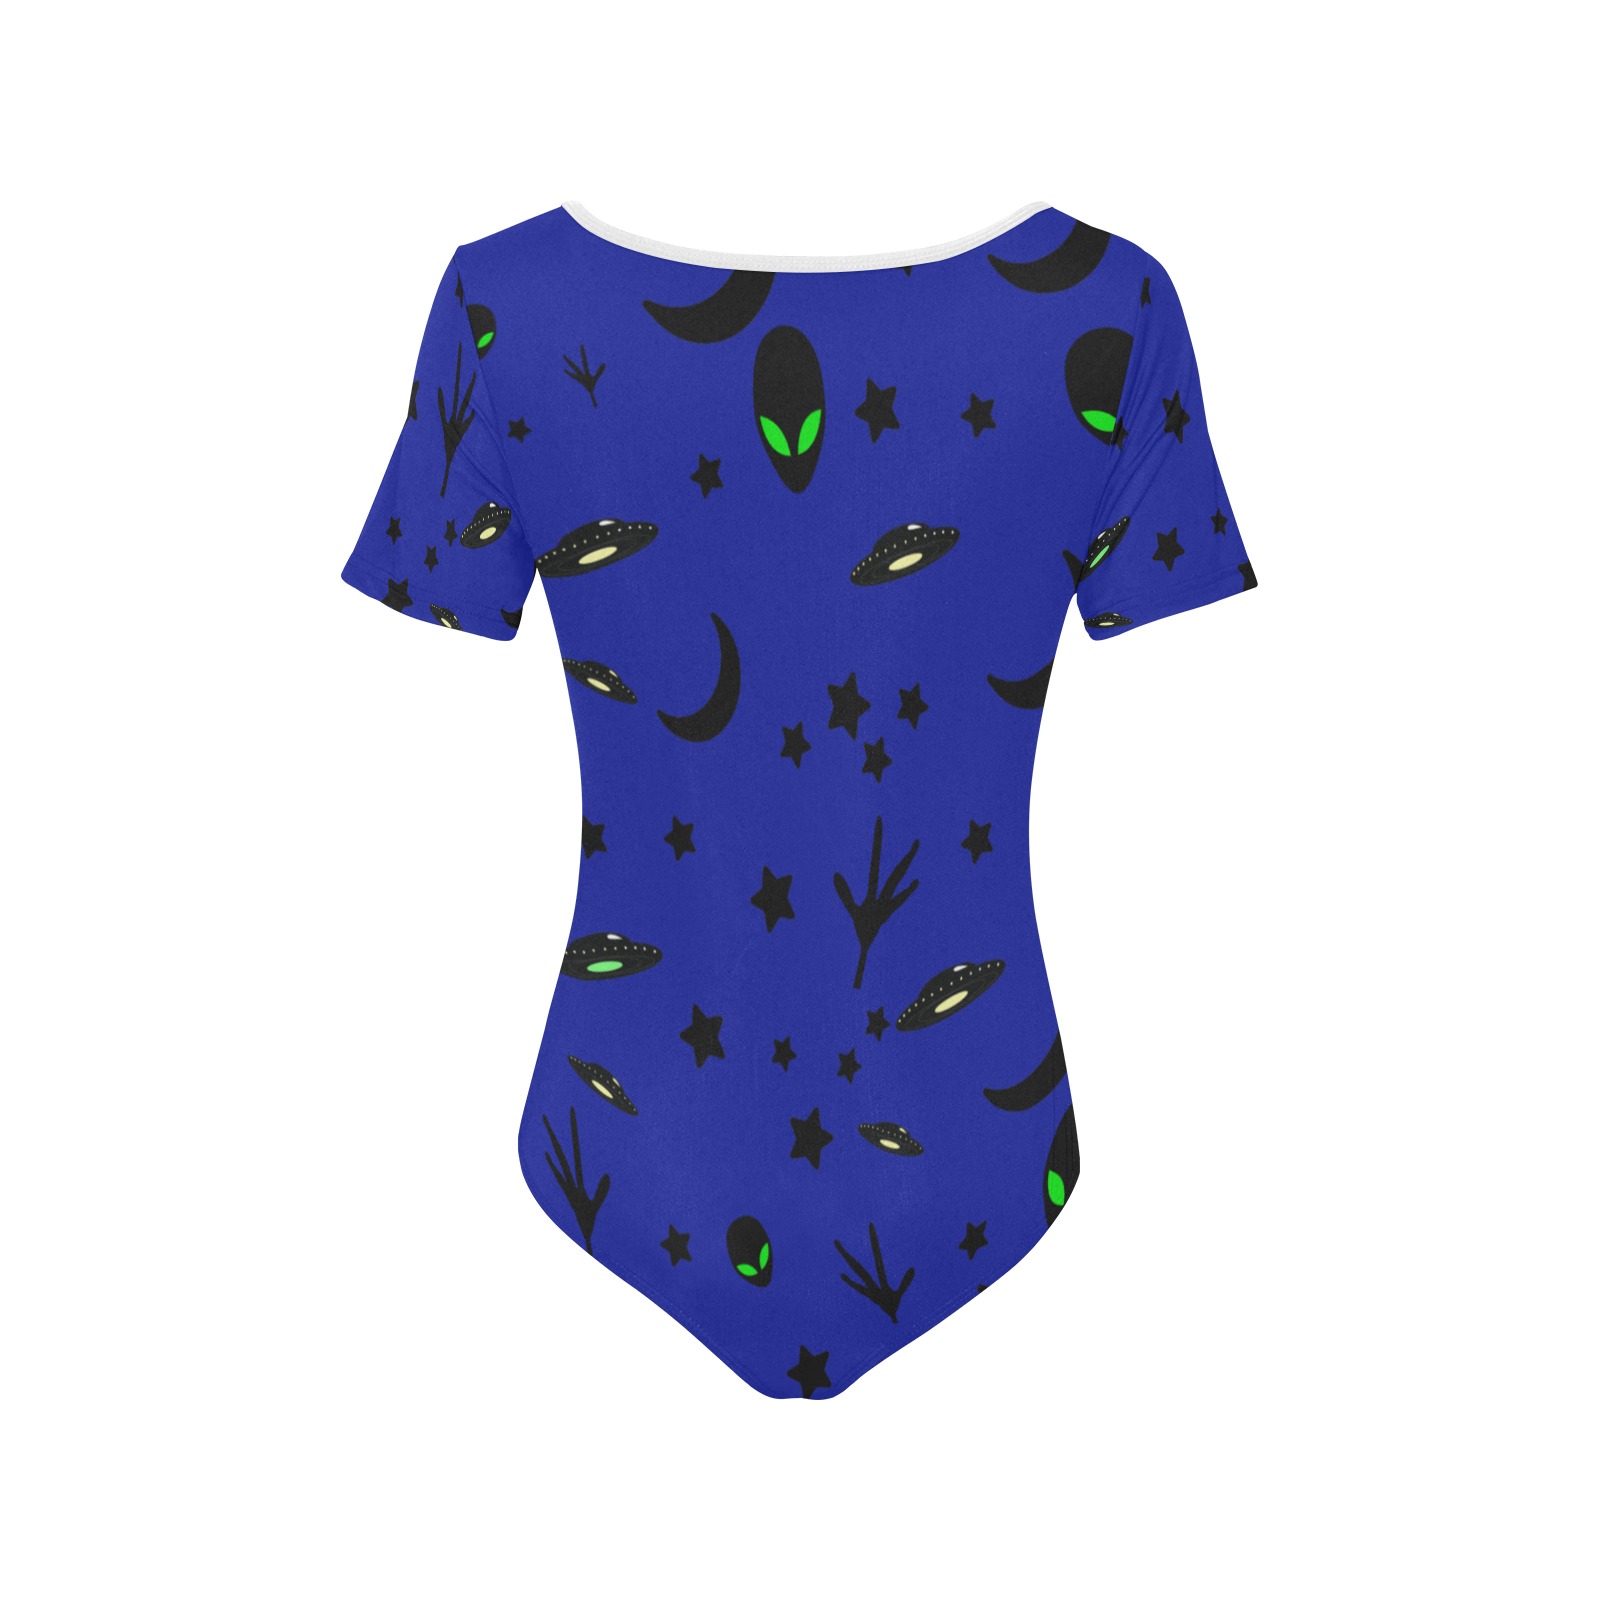 Aliens and Spaceships on Blue Women's Short Sleeve Bodysuit